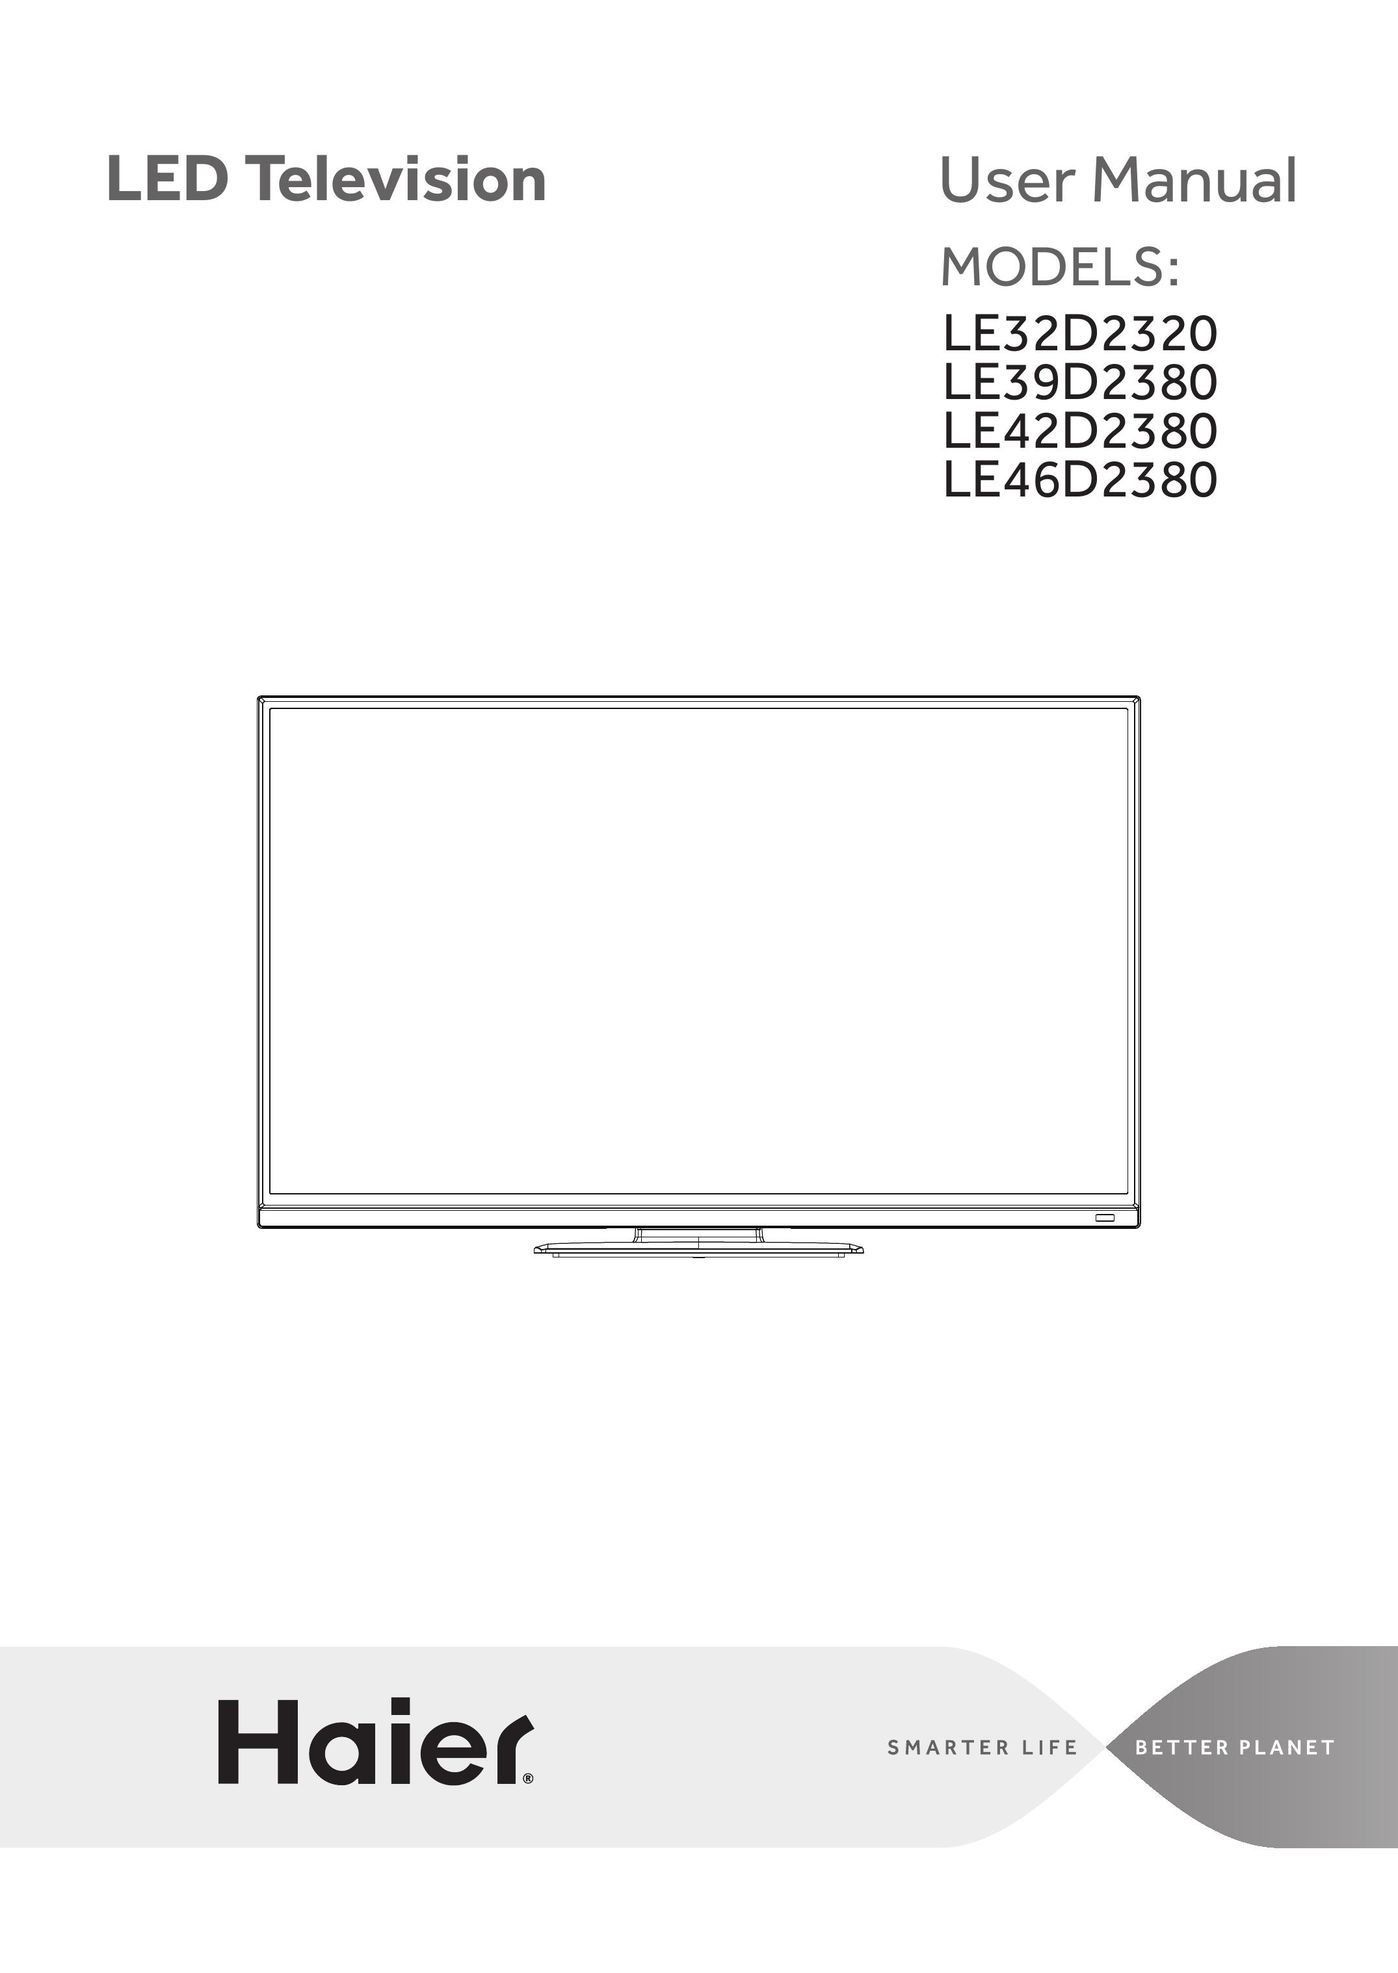 Haier LE32D2320 Car Satellite TV System User Manual